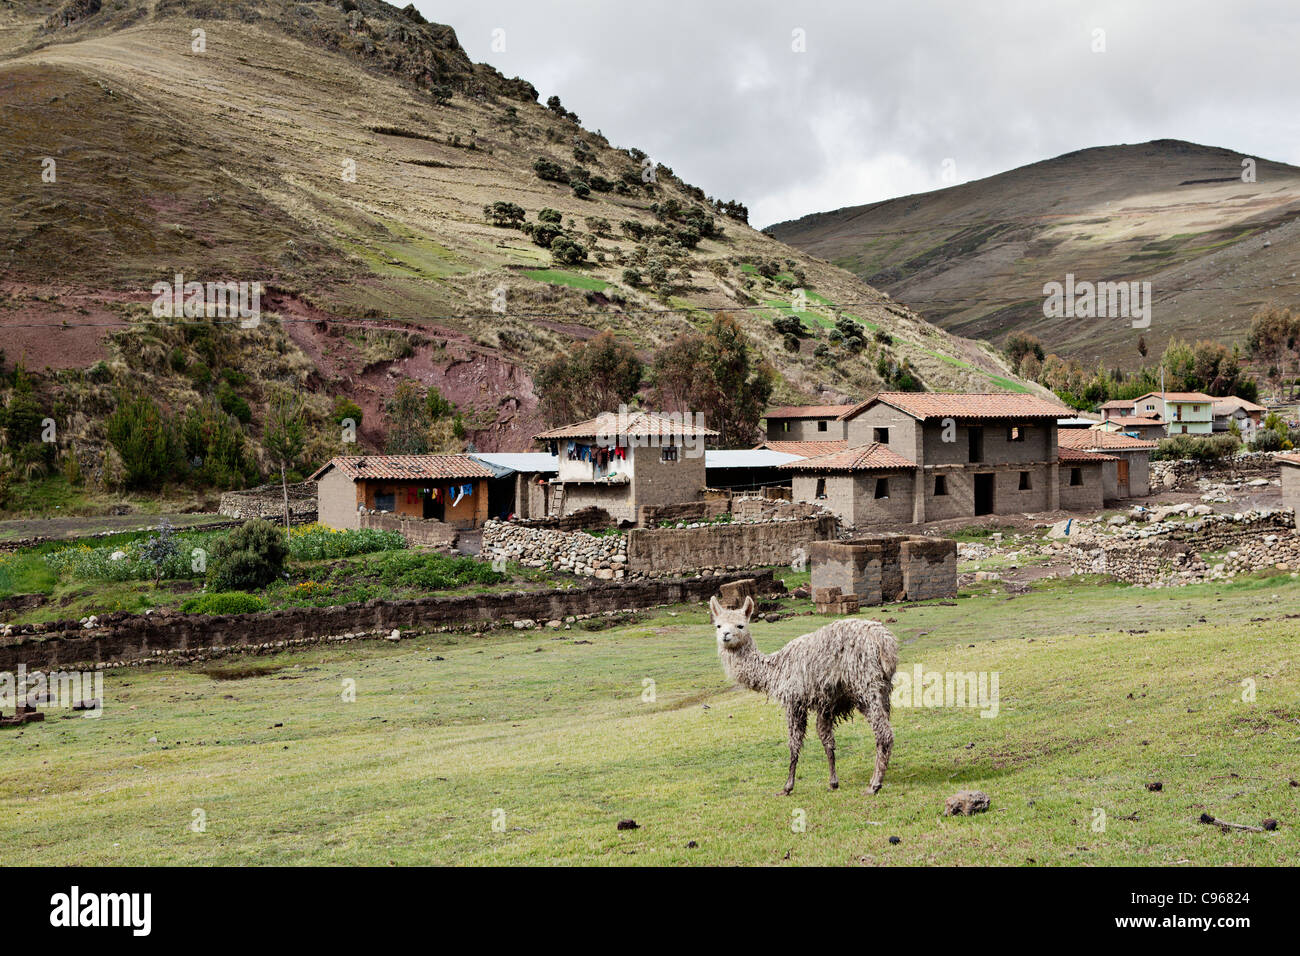 Llama in Pampallaqta village, Andes mountains, Peru. Stock Photo